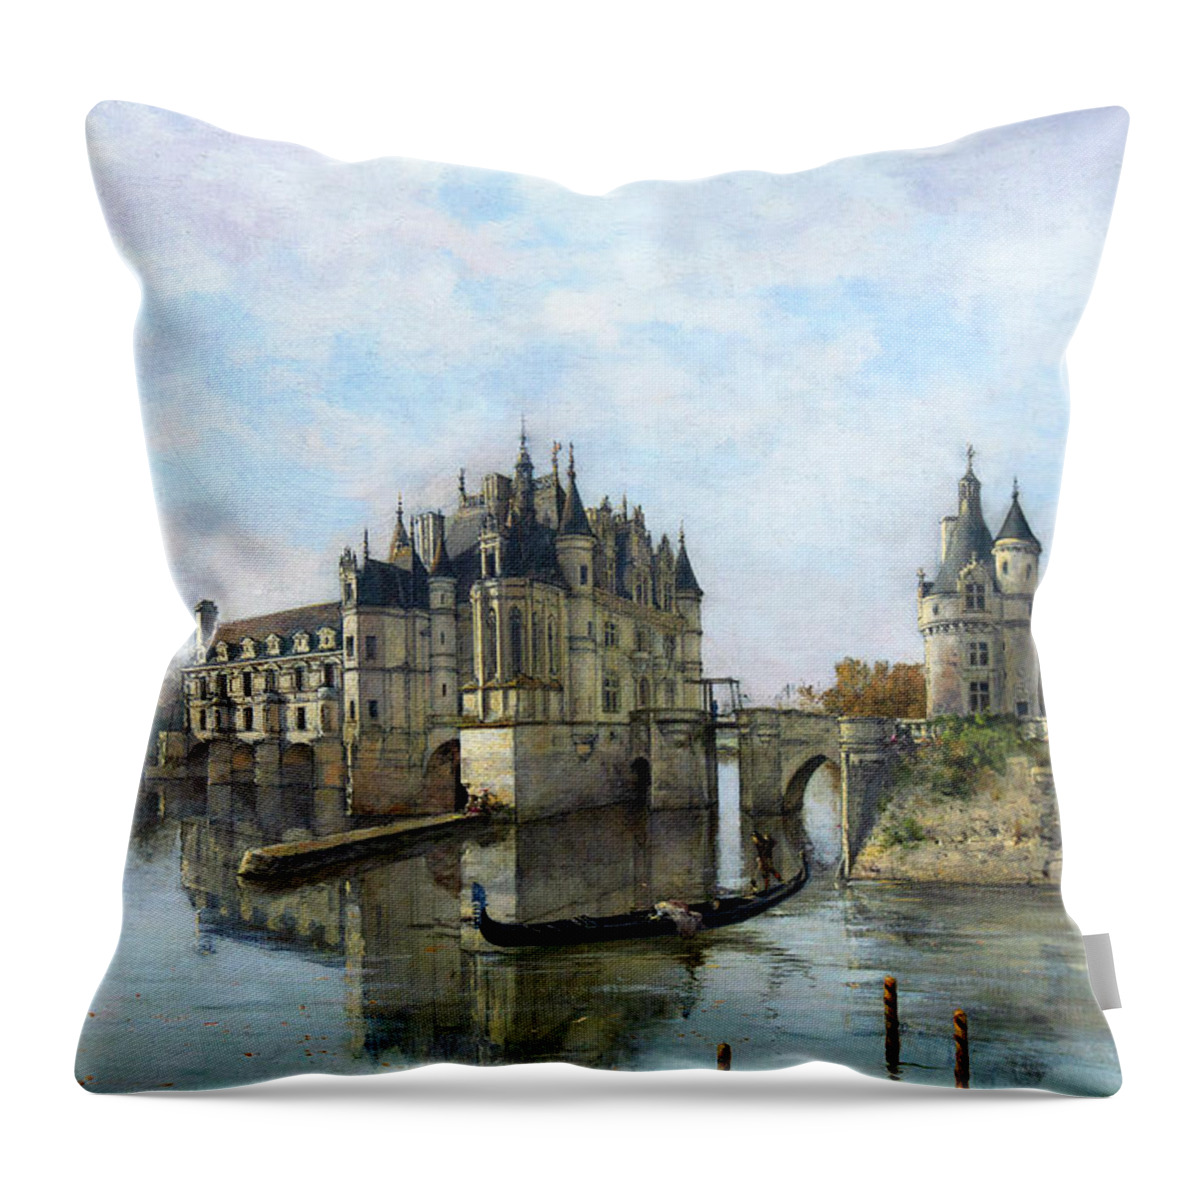 Chateau De Chenonceau Emmanuel Lansyer Throw Pillow featuring the painting Chateau de Chenonceau - Emmanuel Lansyer by Weston Westmoreland